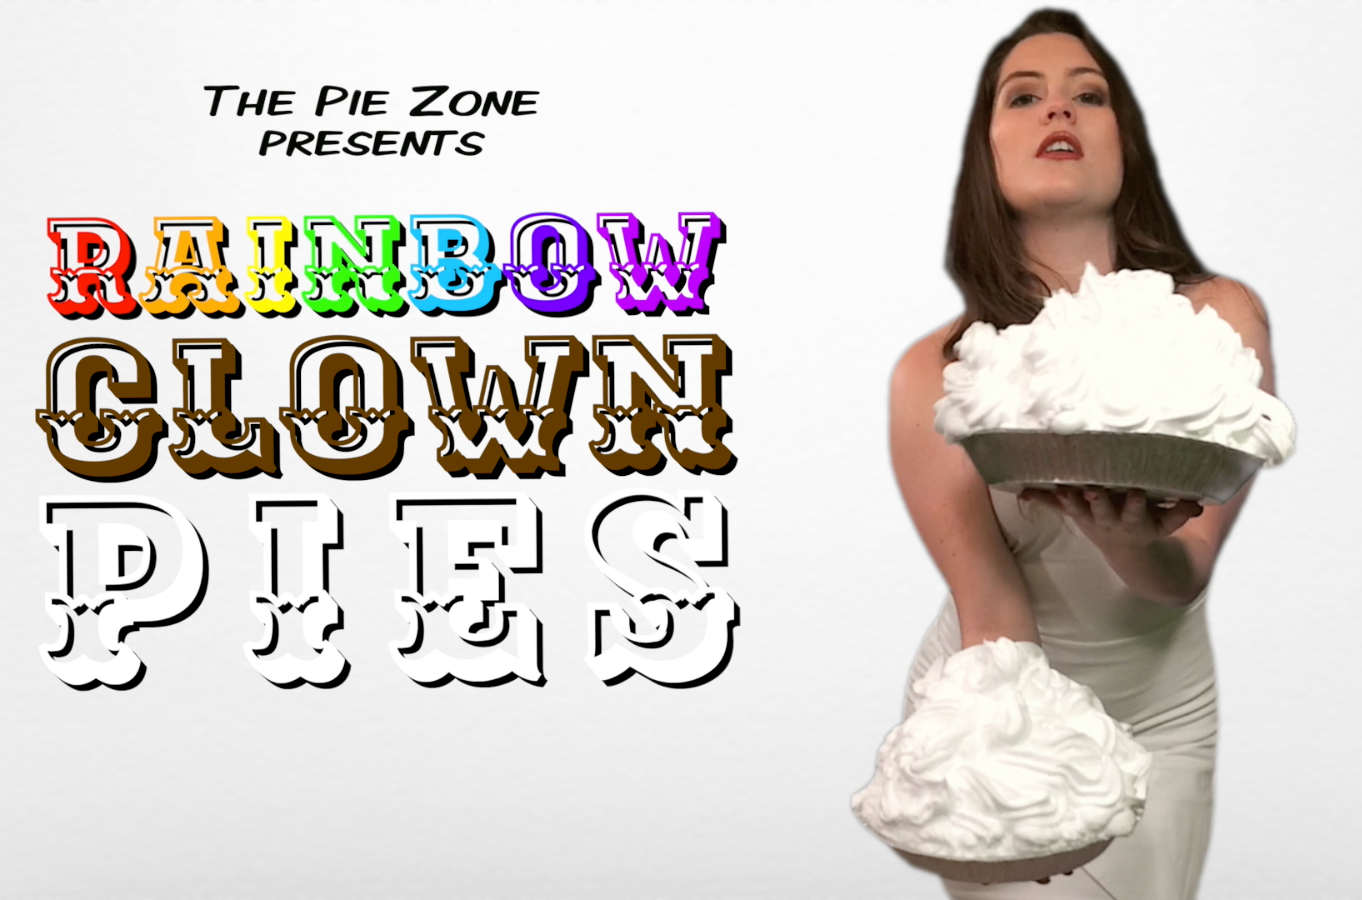 Rainbow Clown Pies "Melissa"